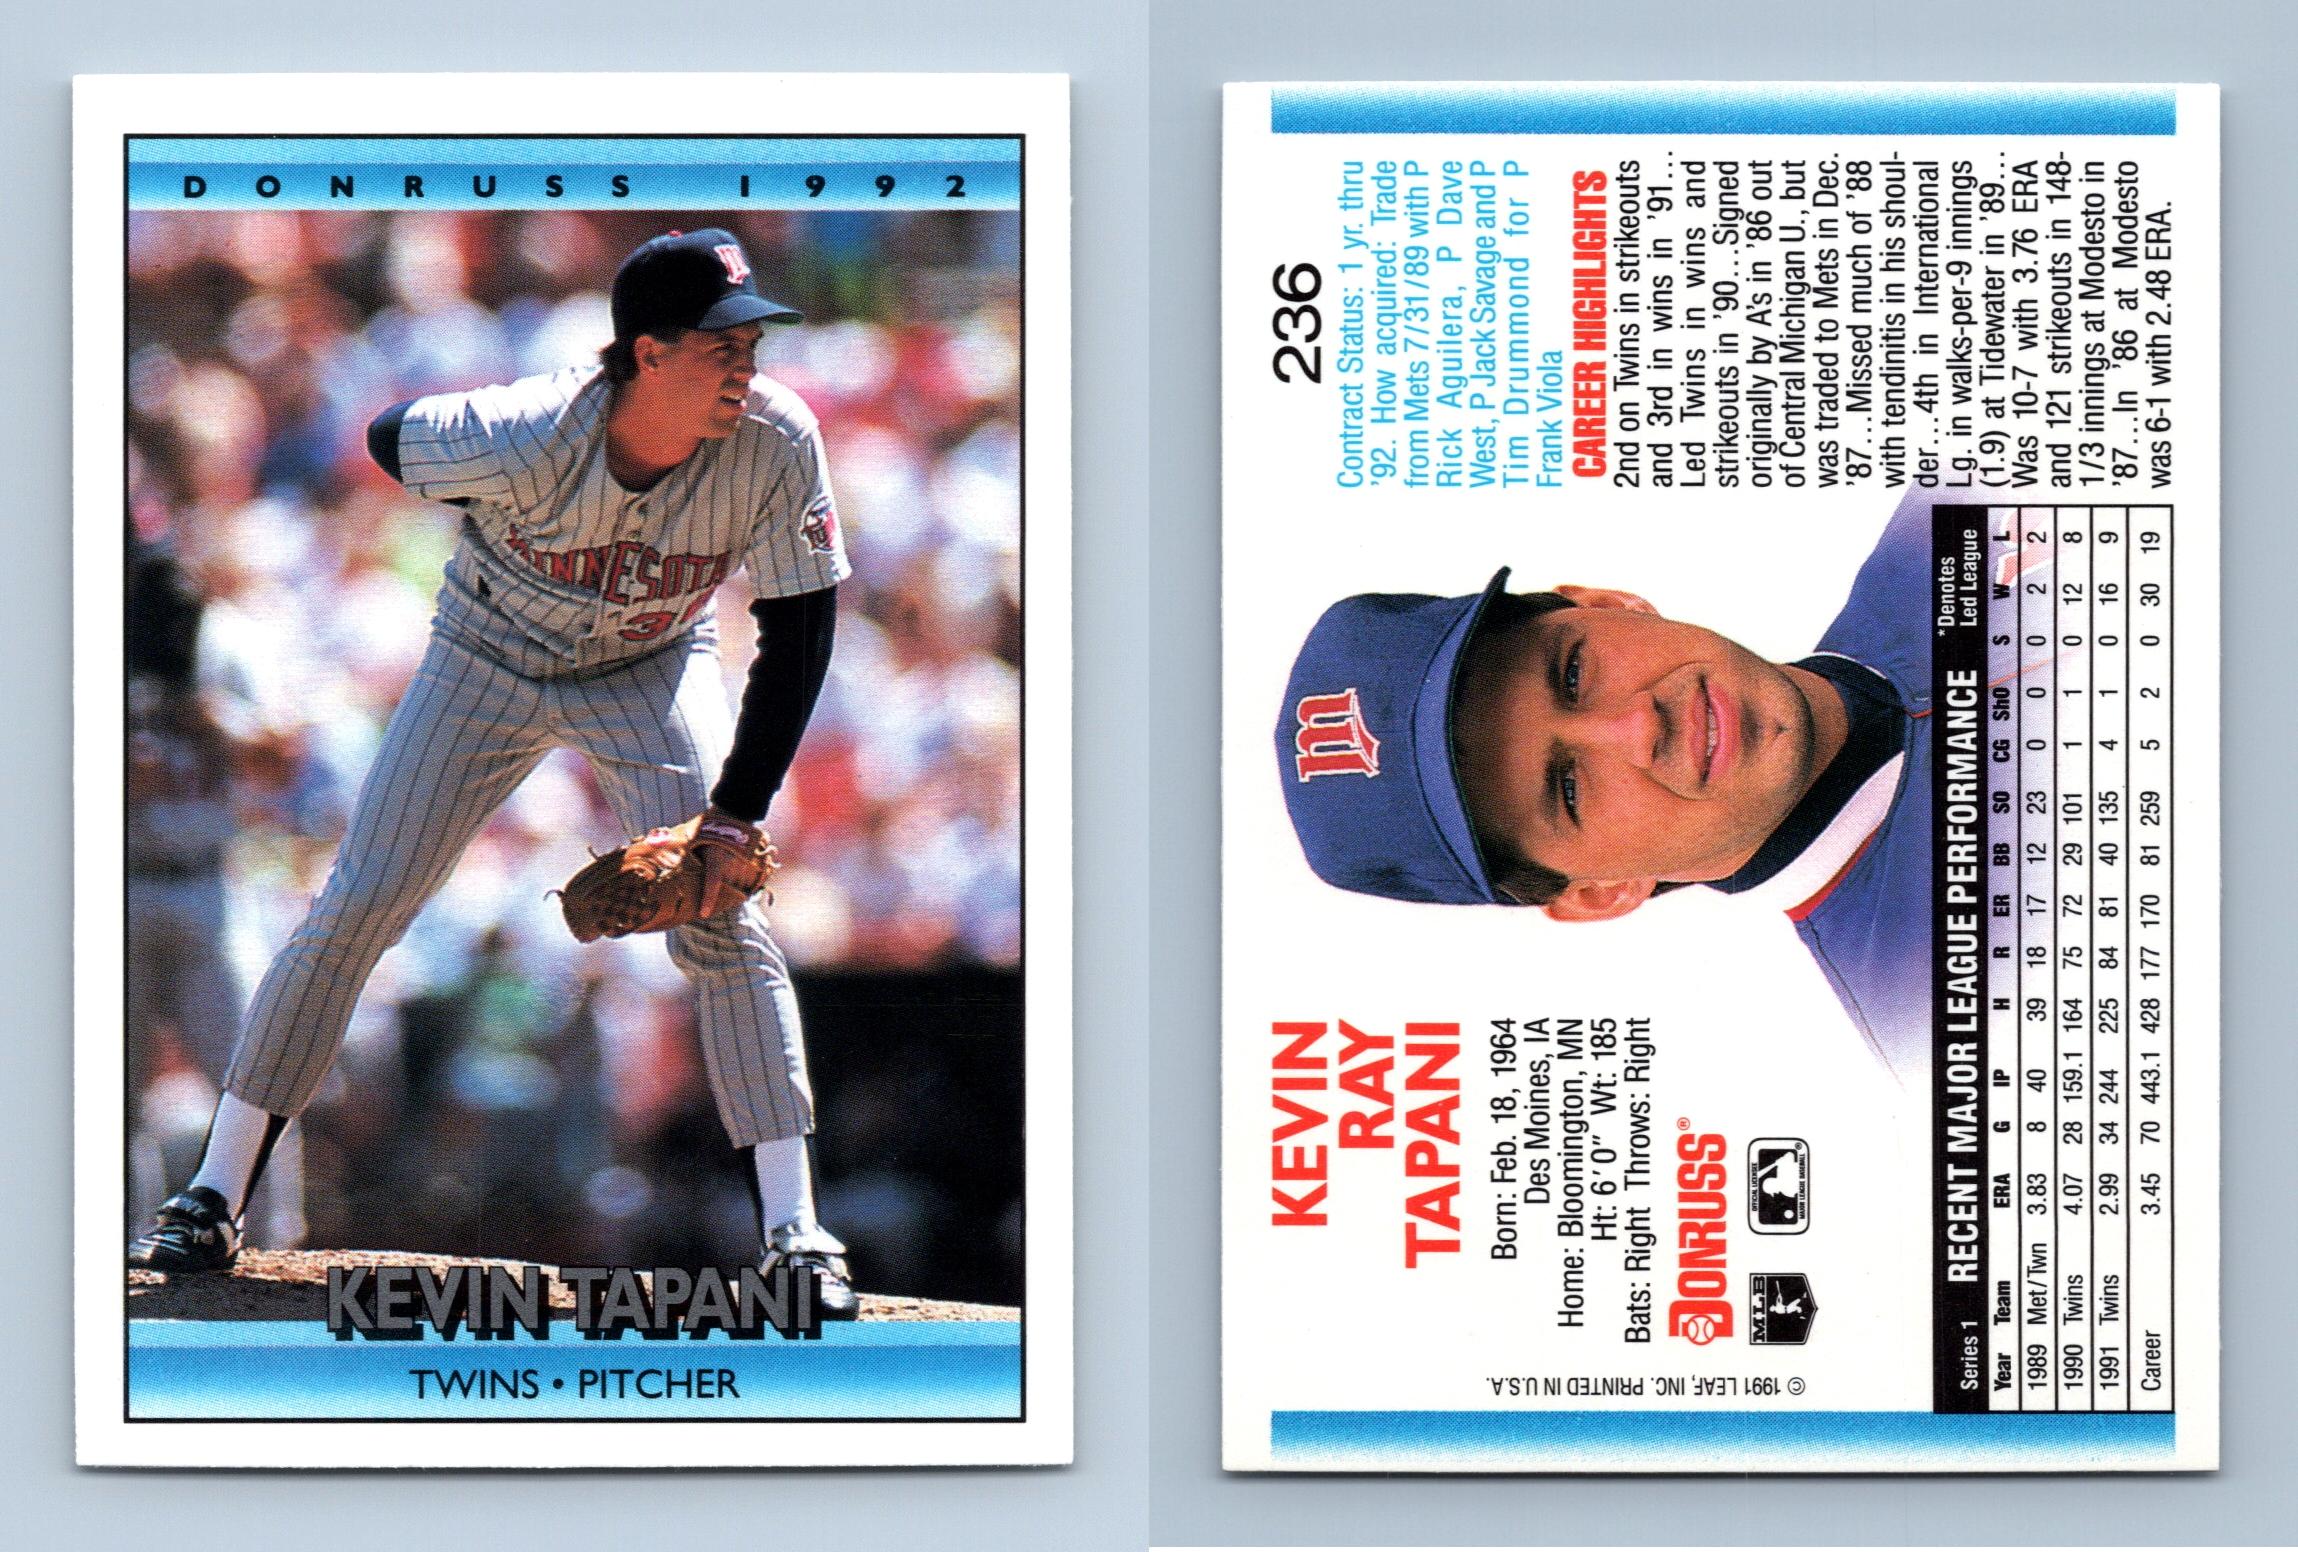 Roberto Alomar - Blue Jays #58 Donruss 1992 Baseball Trading Card